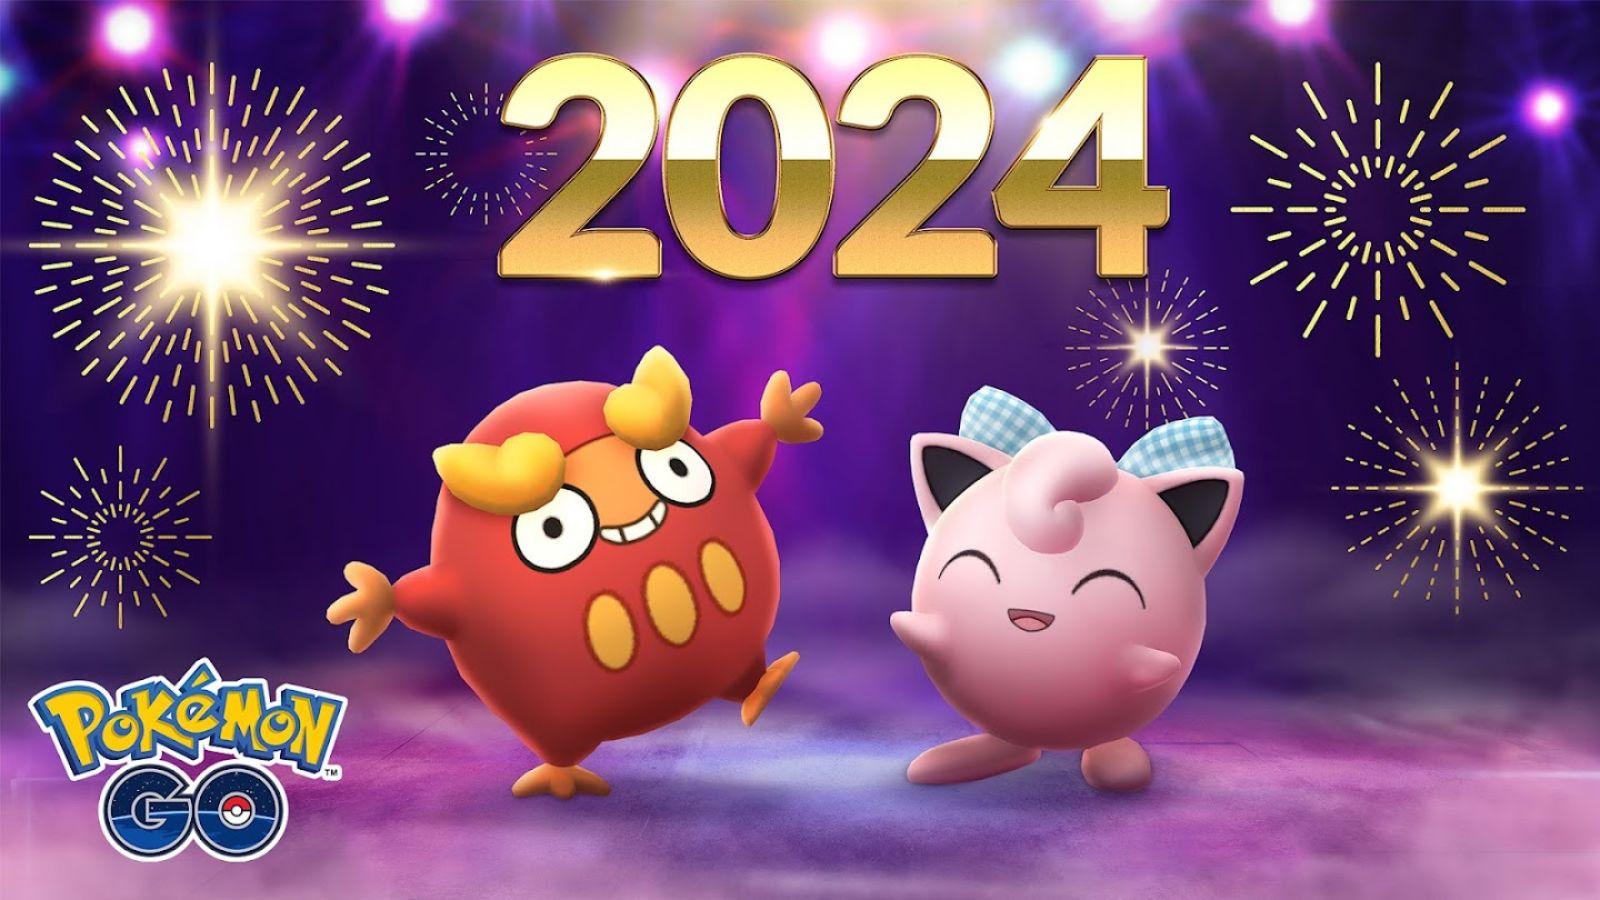 Pokemon Go New Year’s 2024 event Jigglypuff costume, bonuses, more